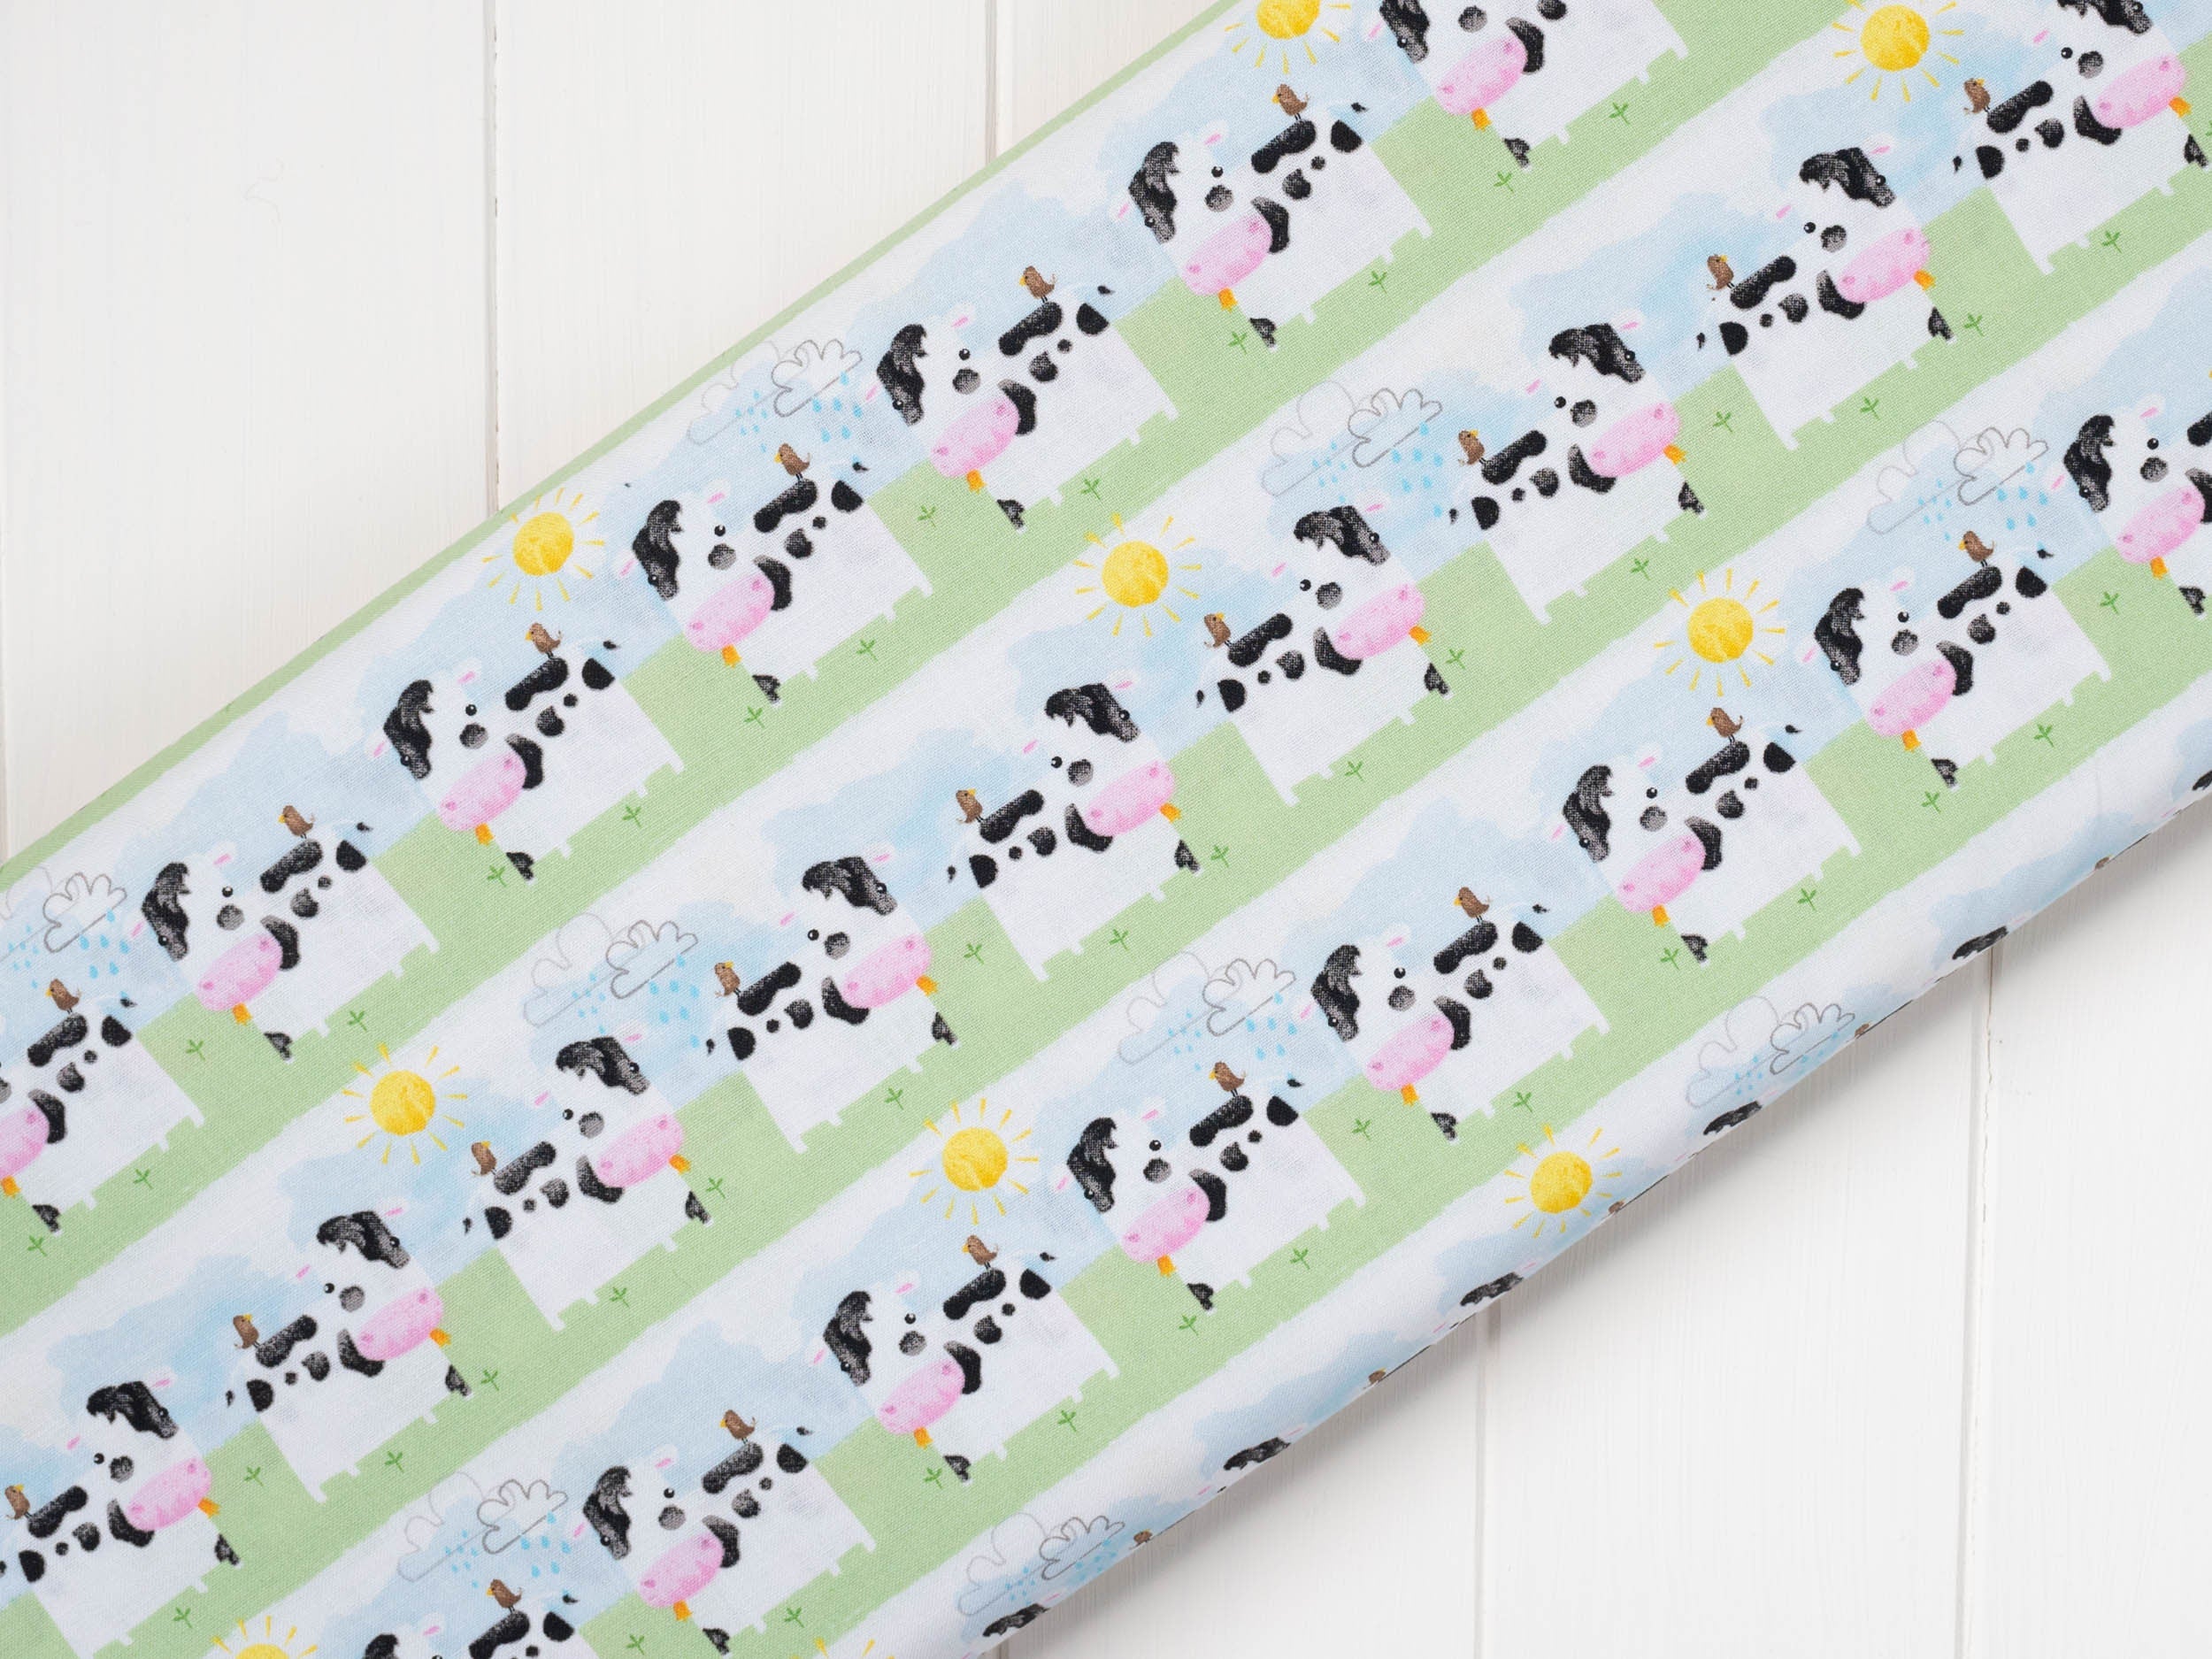 Rabbits, Lambs on green nursery cotton fabric - 'Playful Farm' Fabric Editions